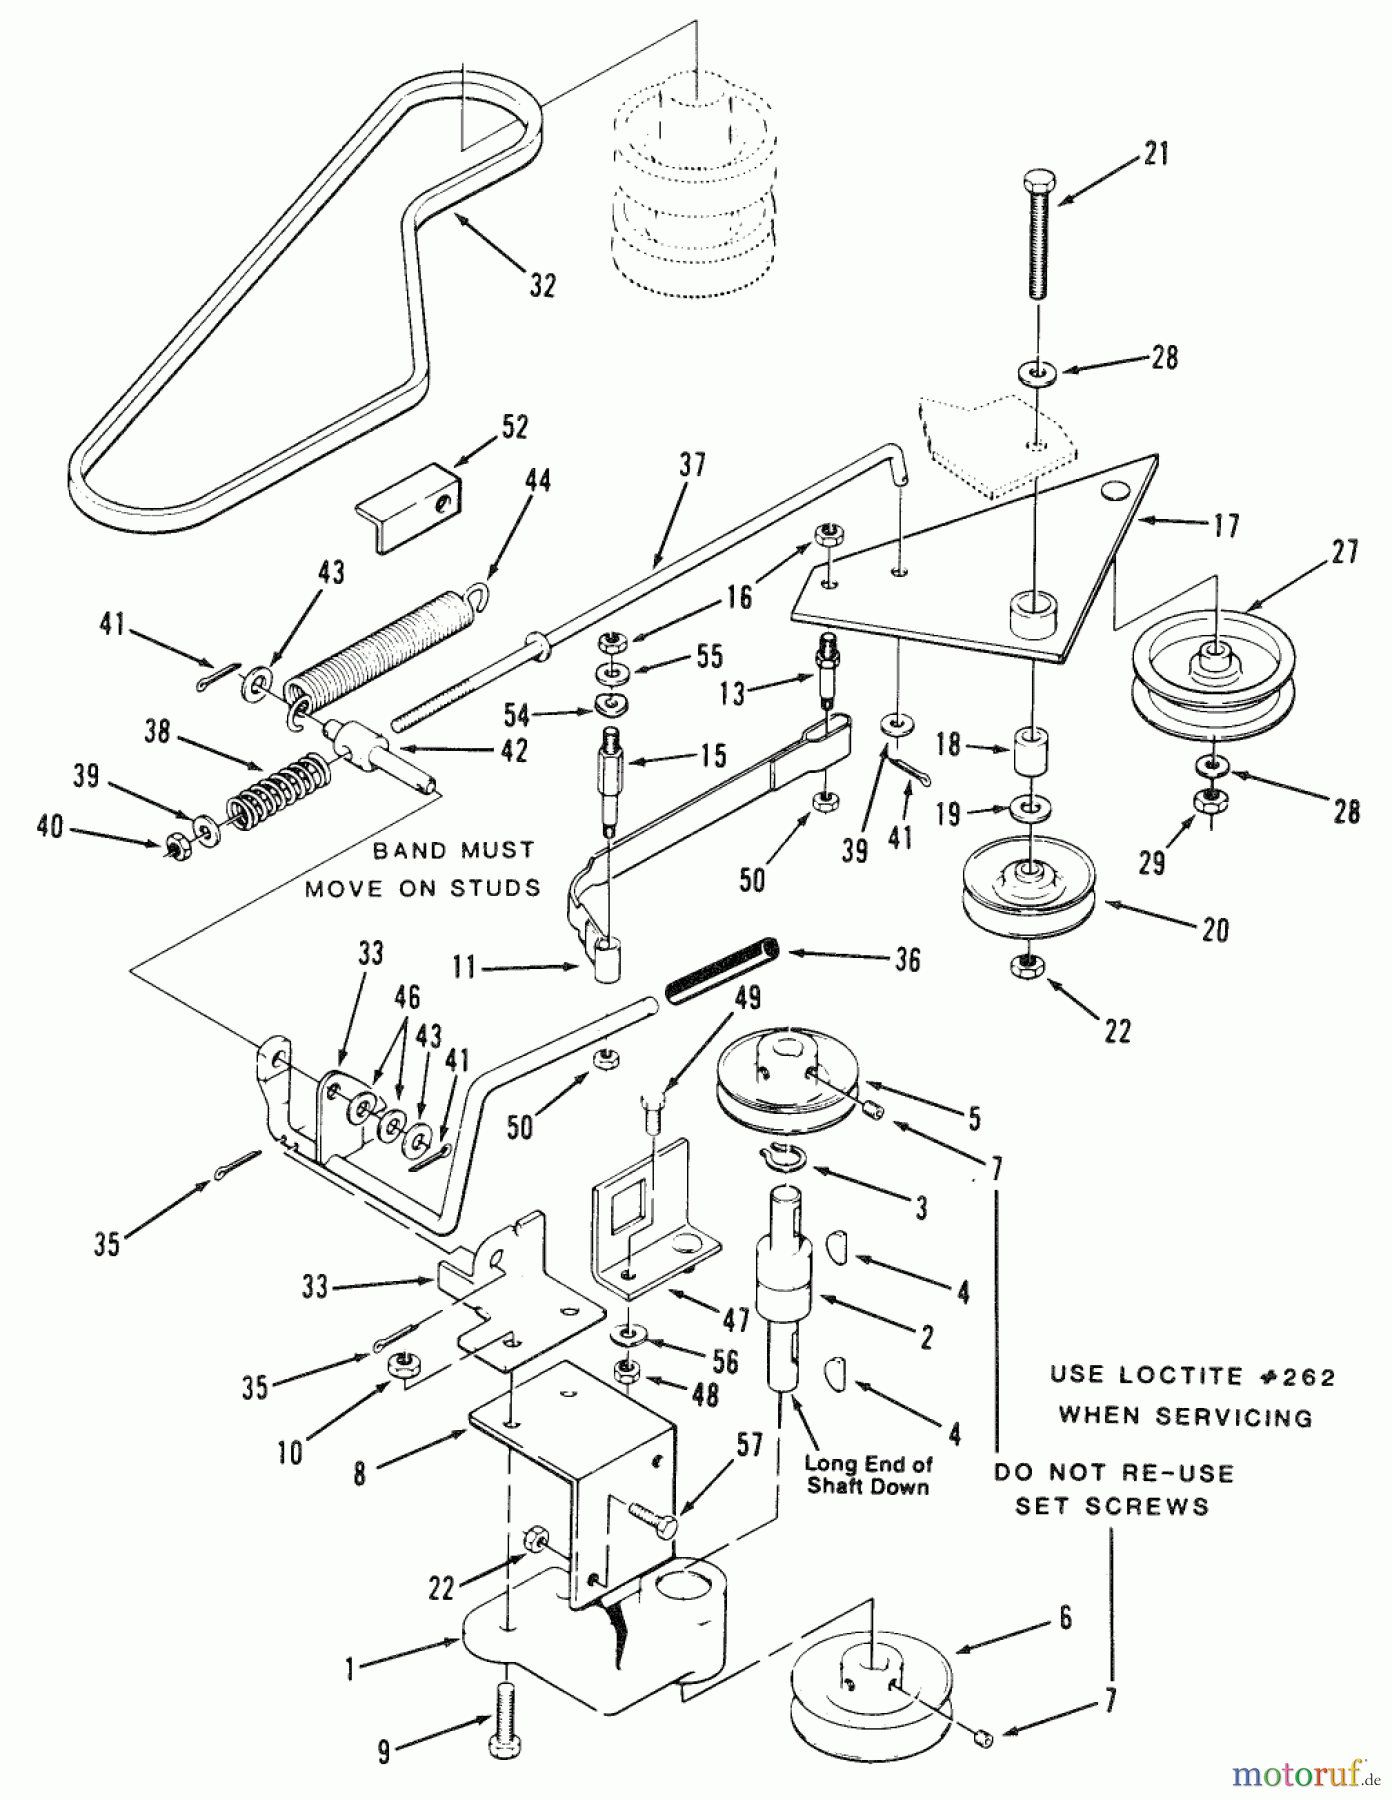  Toro Neu Mowers, Rear-Engine Rider R3-10B402 (110-4e) - Toro 110-4e Rear Engine Rider, 1991 SECTION 10-PTO CLUTCH, PULLEYS, AND CONTROLS